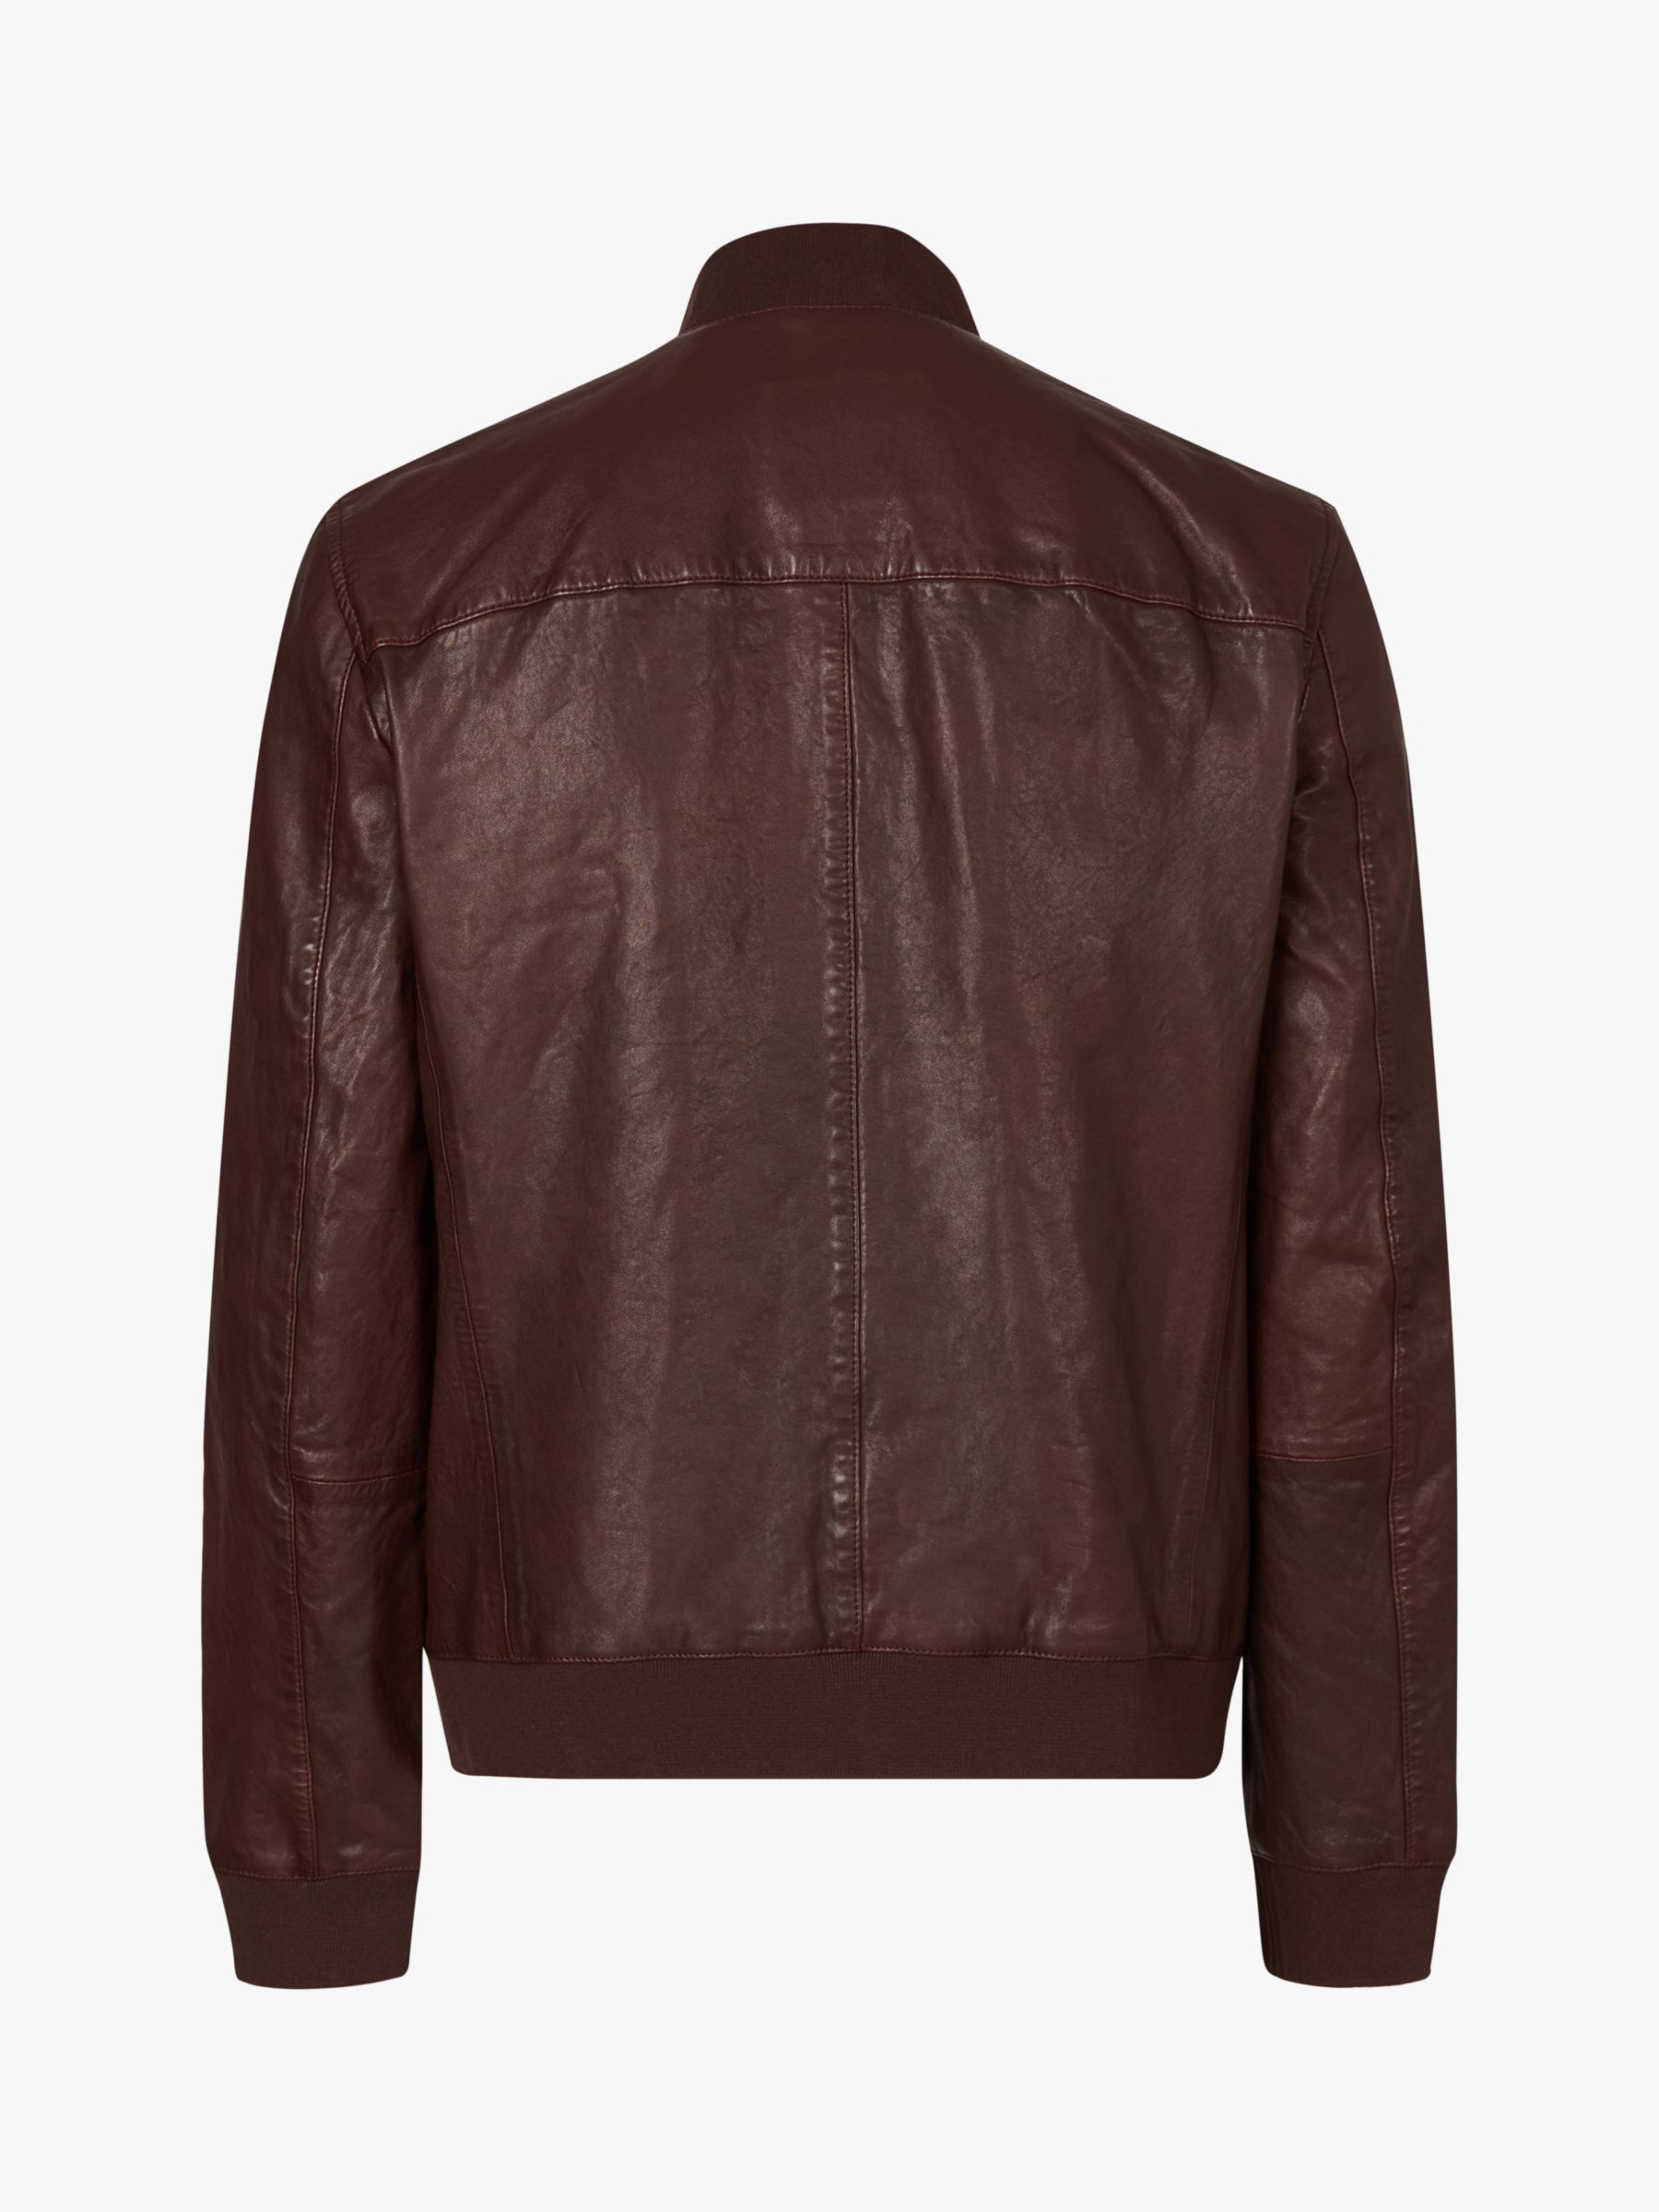 AllSaints Boyton Leather Bomber Jacket, Oxblood Red